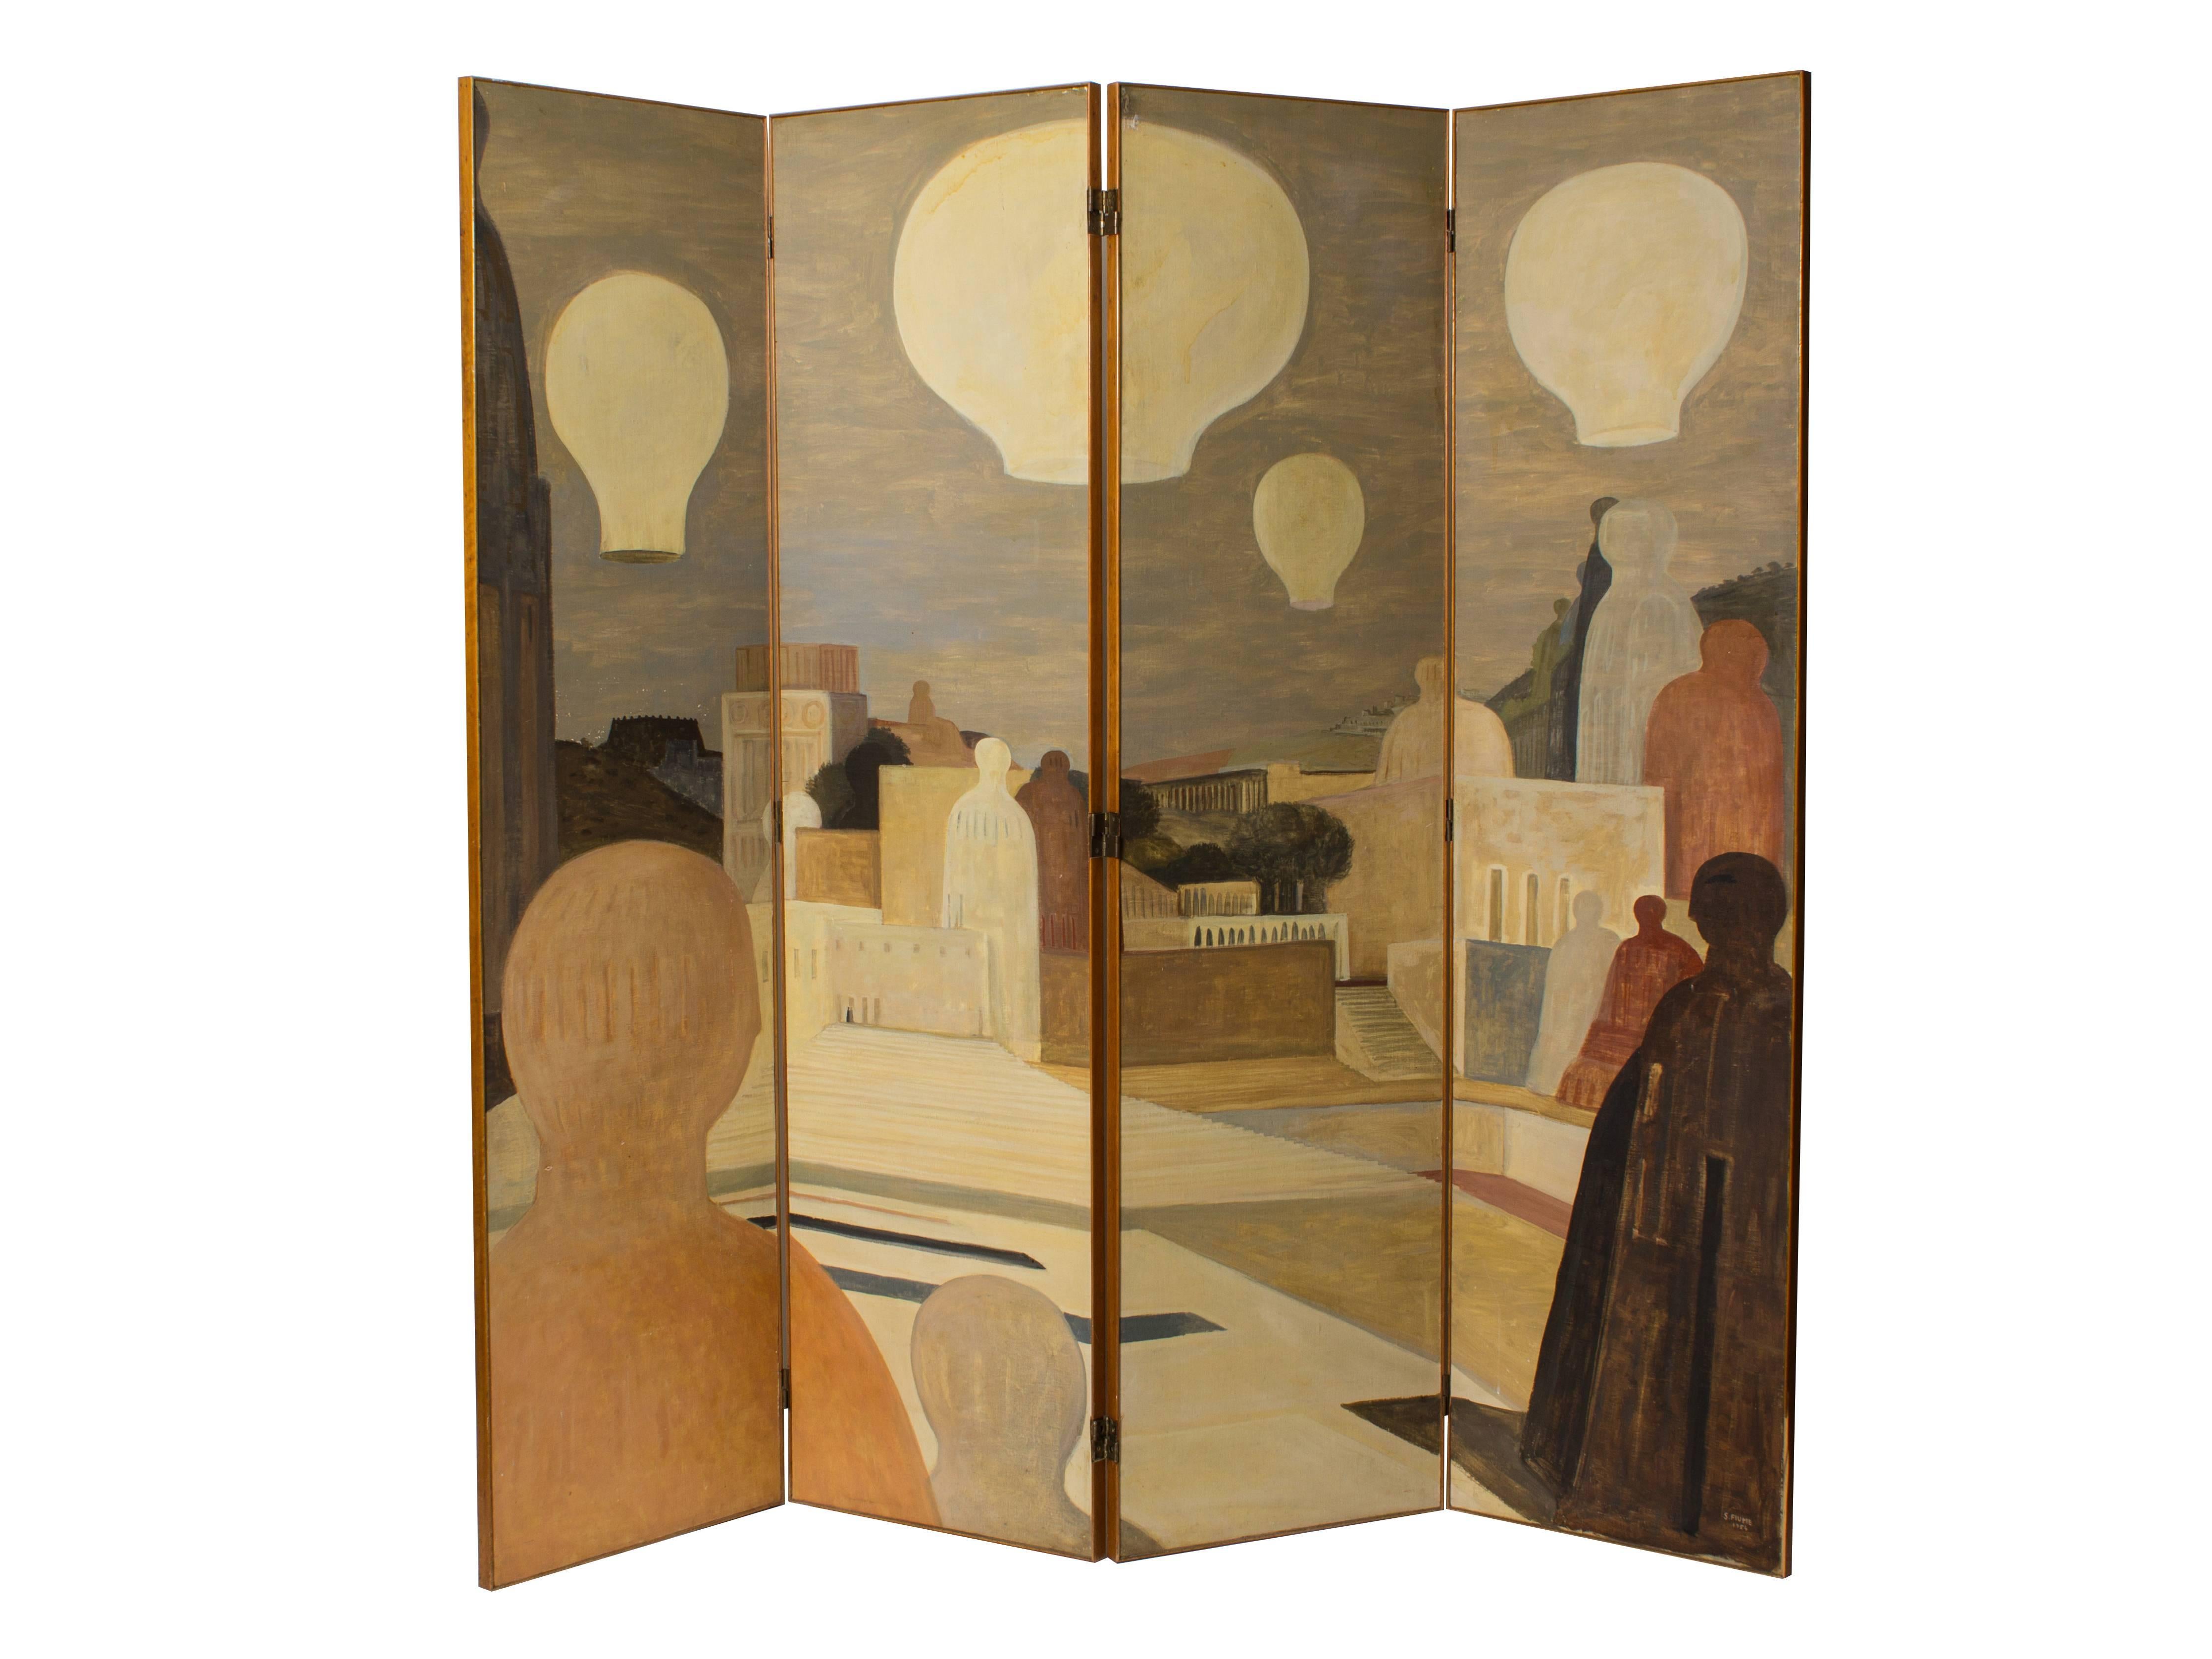 Salvatore Fiume, Italian (1915-1997) double hinged folding screen 1954. Four-panel screen, each panel measures 18